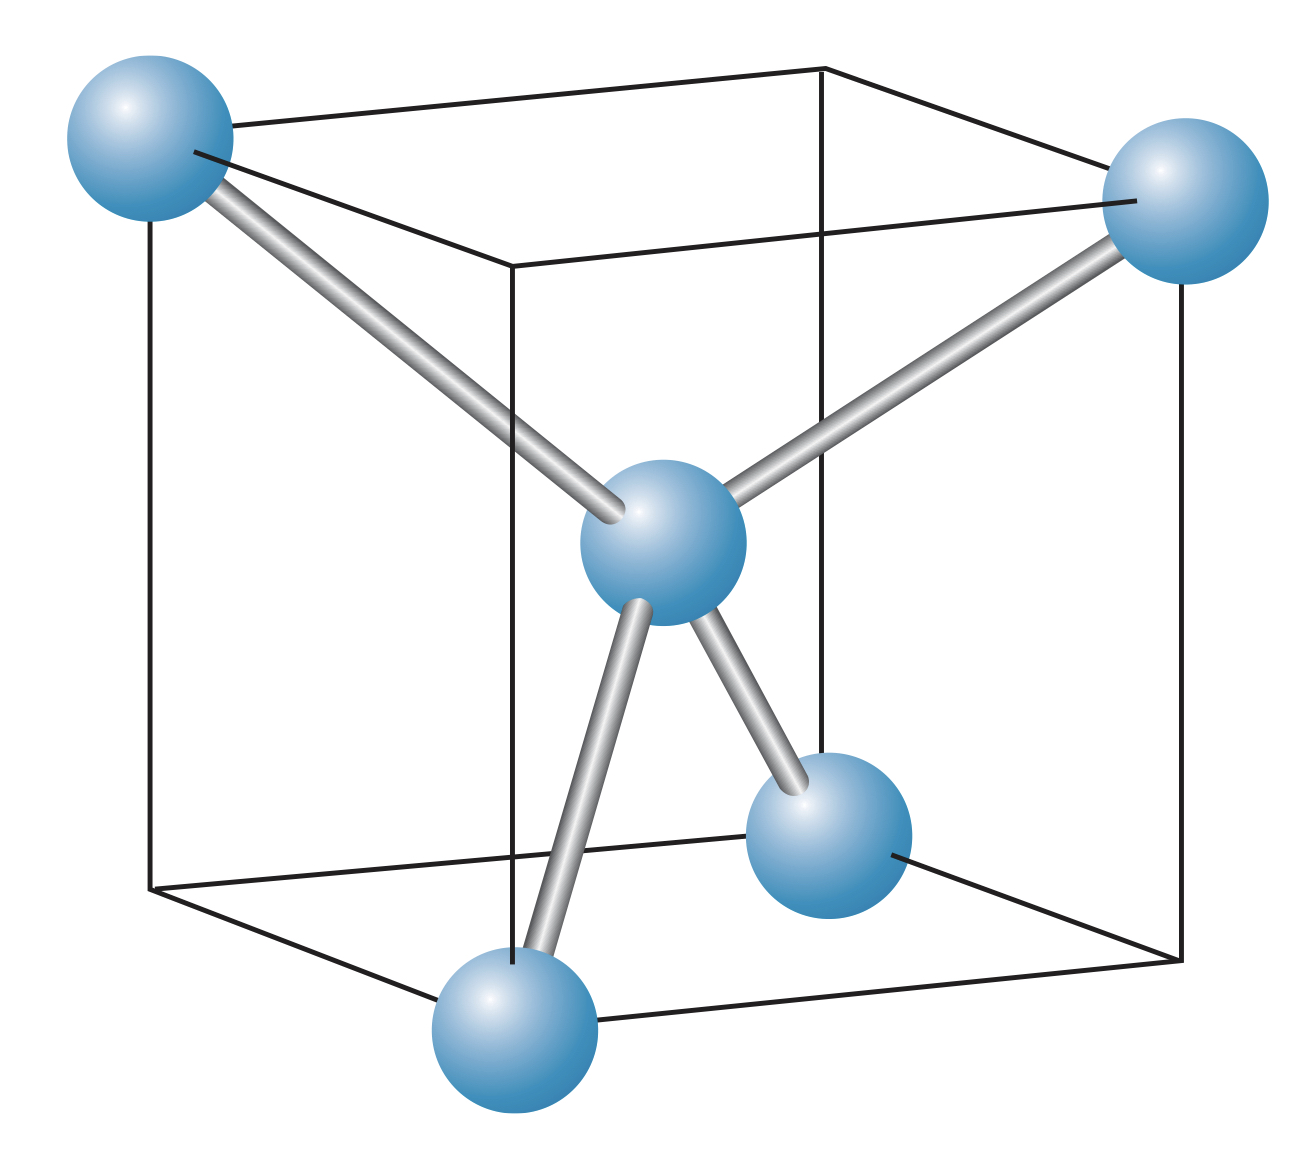 Carbon tetrahedron